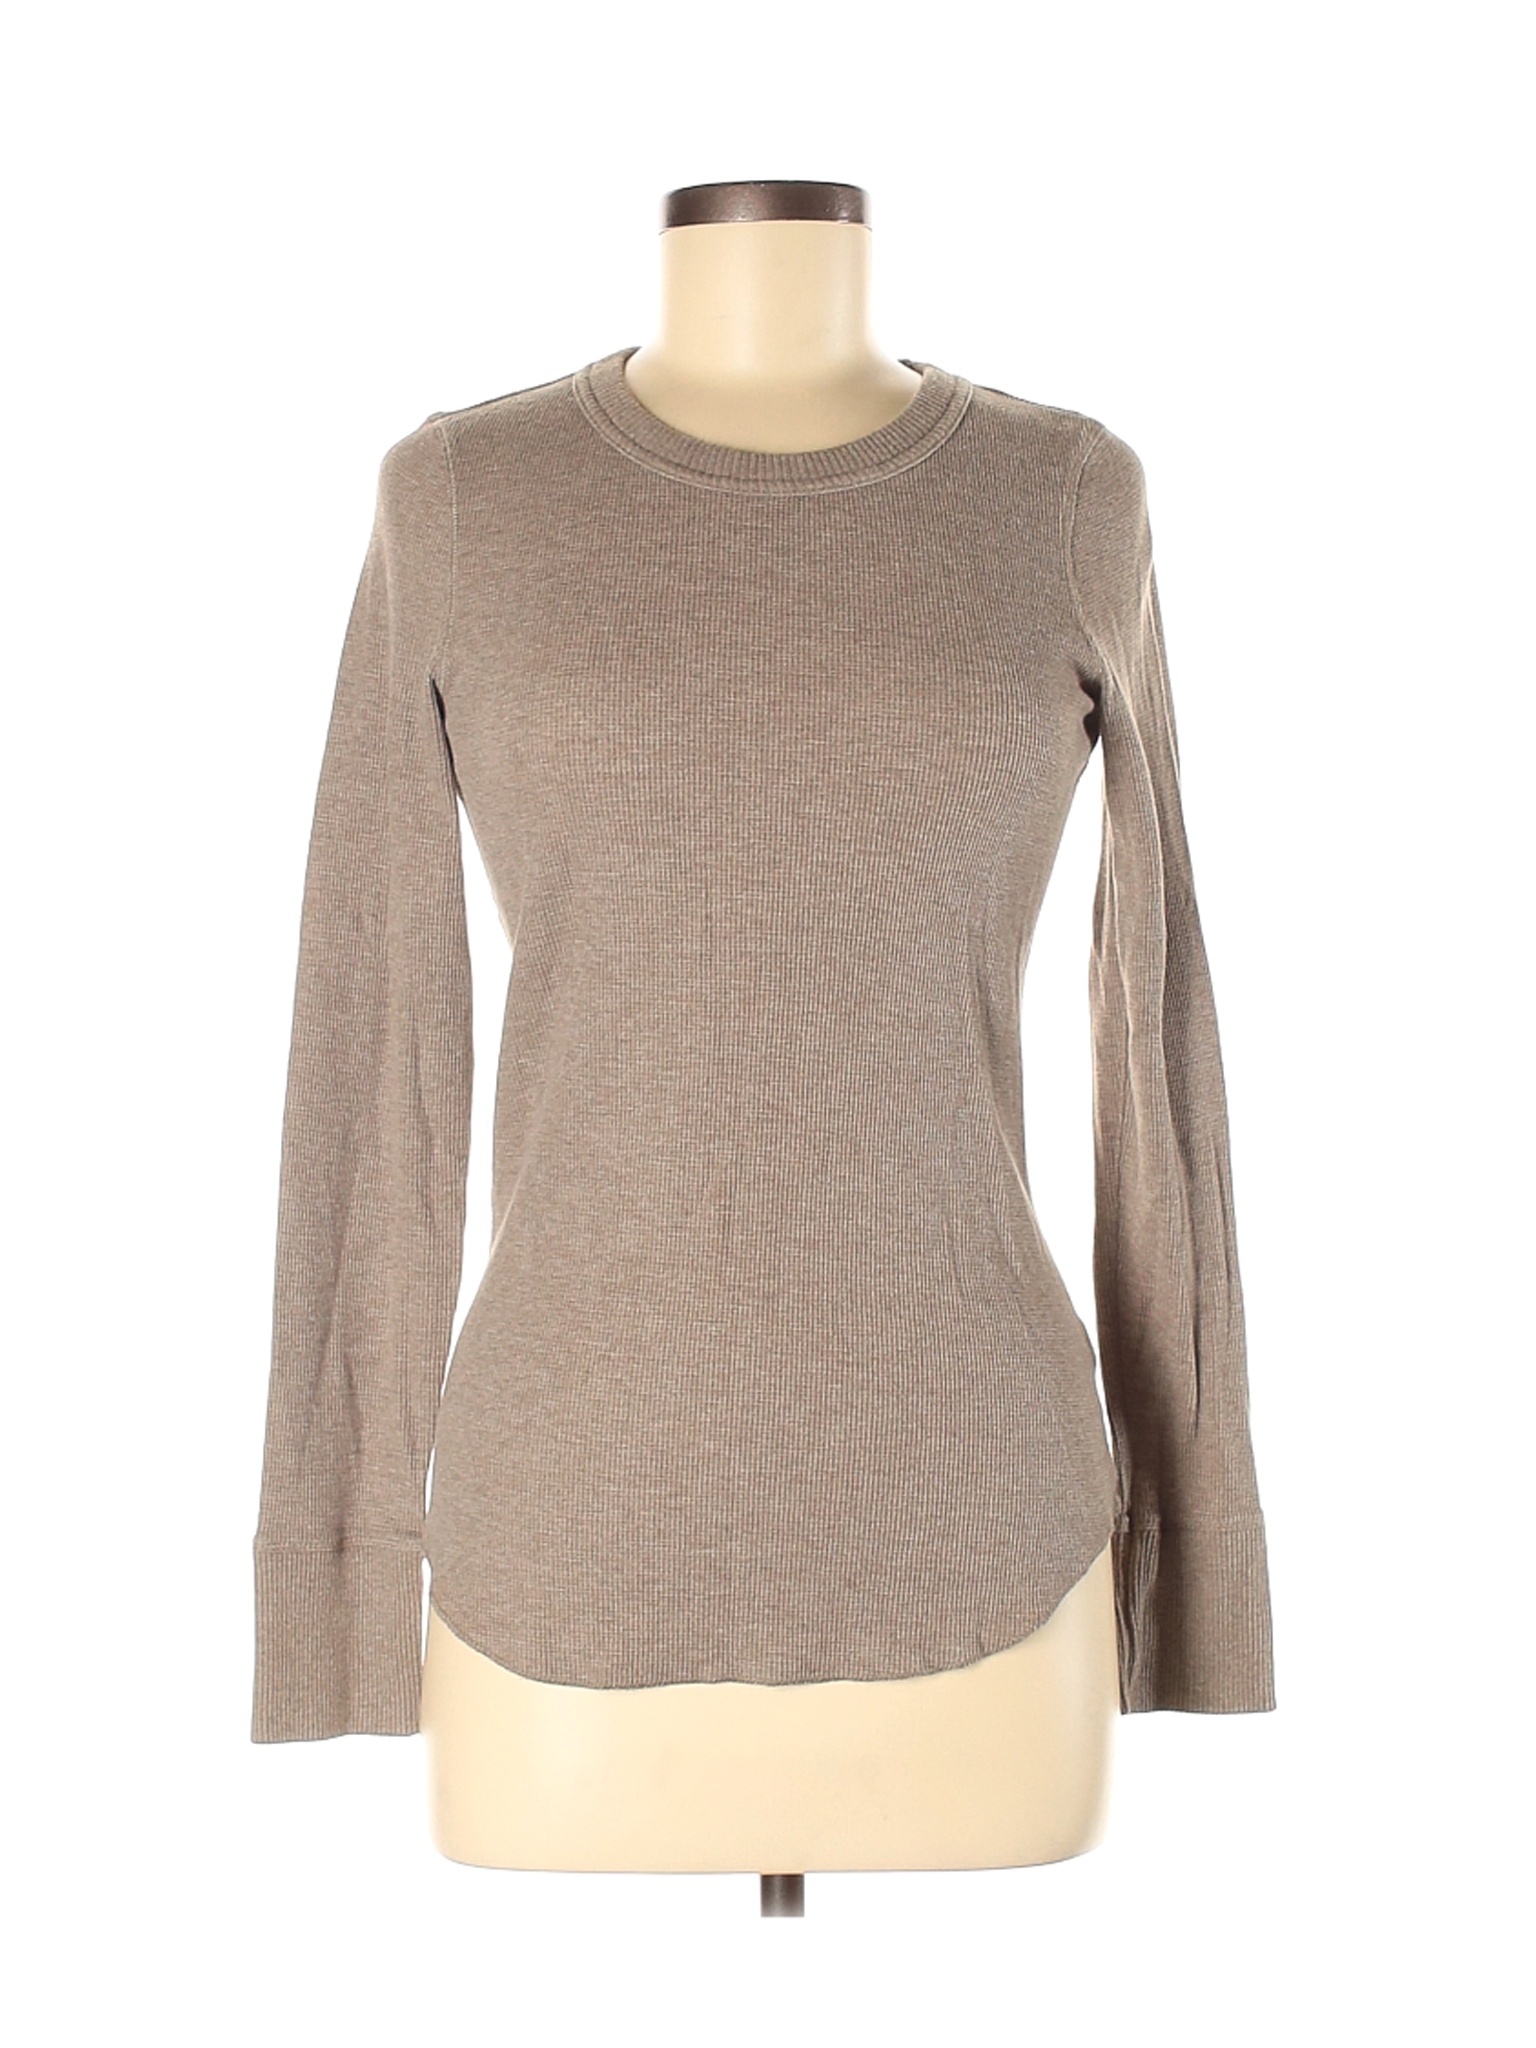 Gap Women Brown Pullover Sweater M | eBay